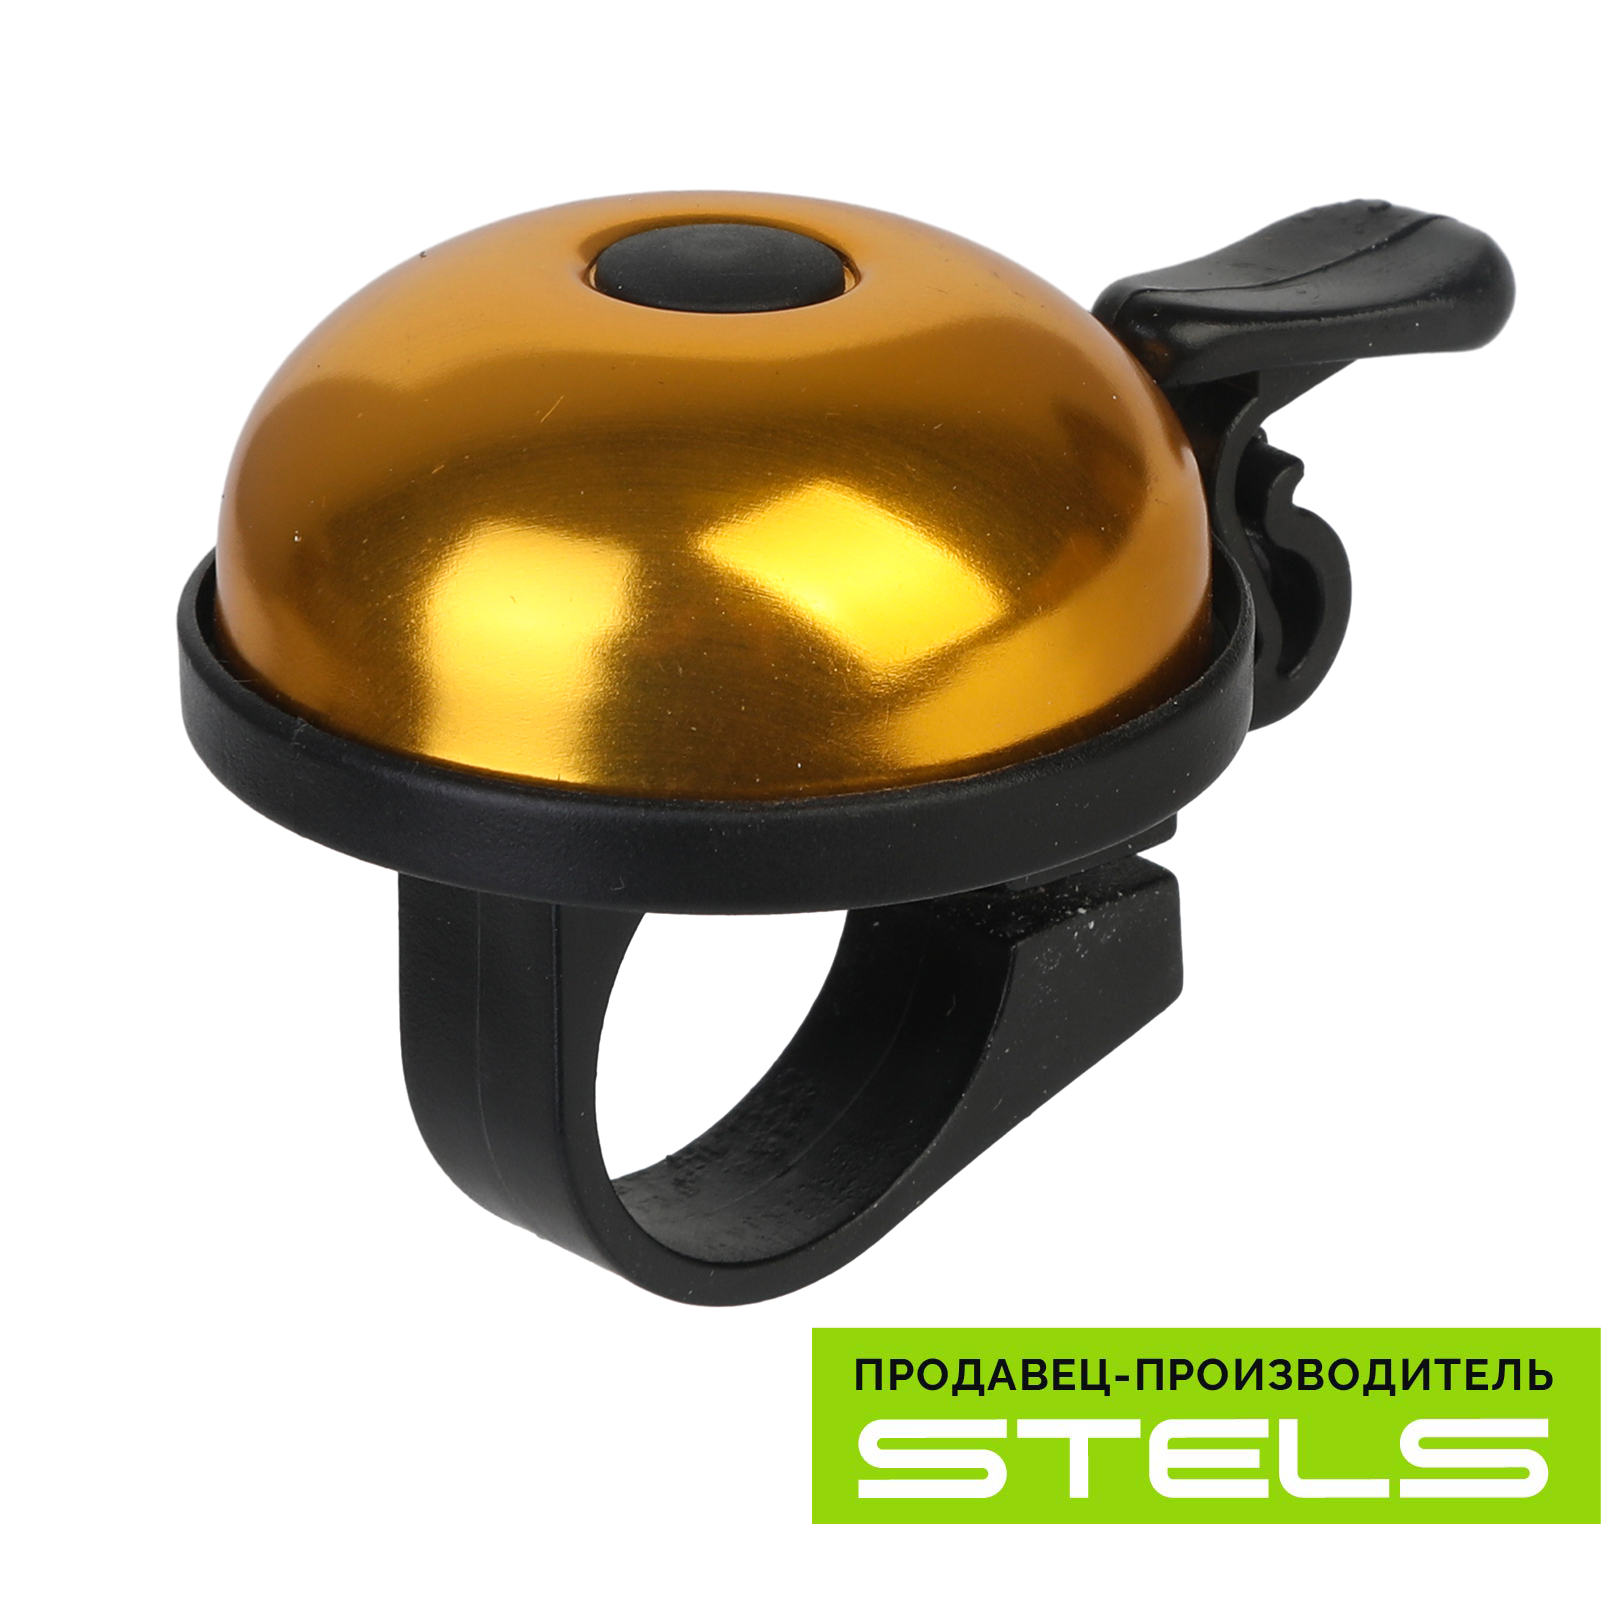 Звонок для велосипеда STELS 16A-02 алюминий/пластик, чёрно-золотистый